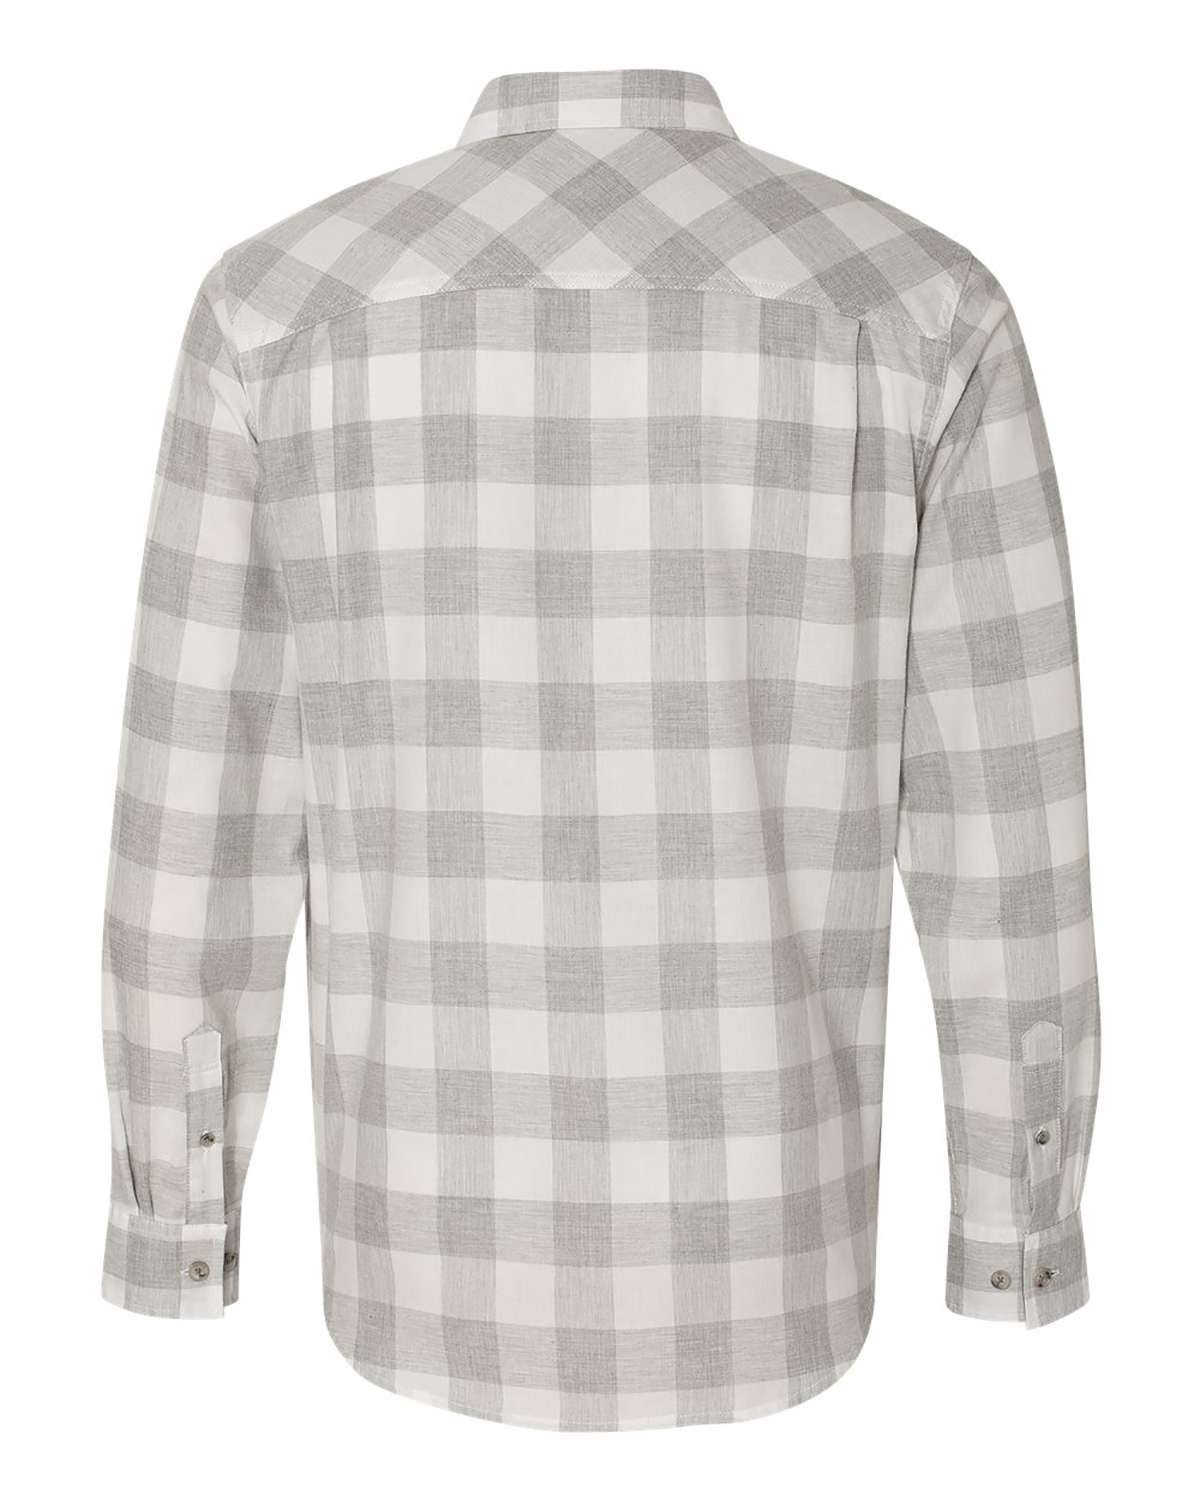 'Weatherproof 164761 Vintage Brushed Flannel Long Sleeve Shirt'